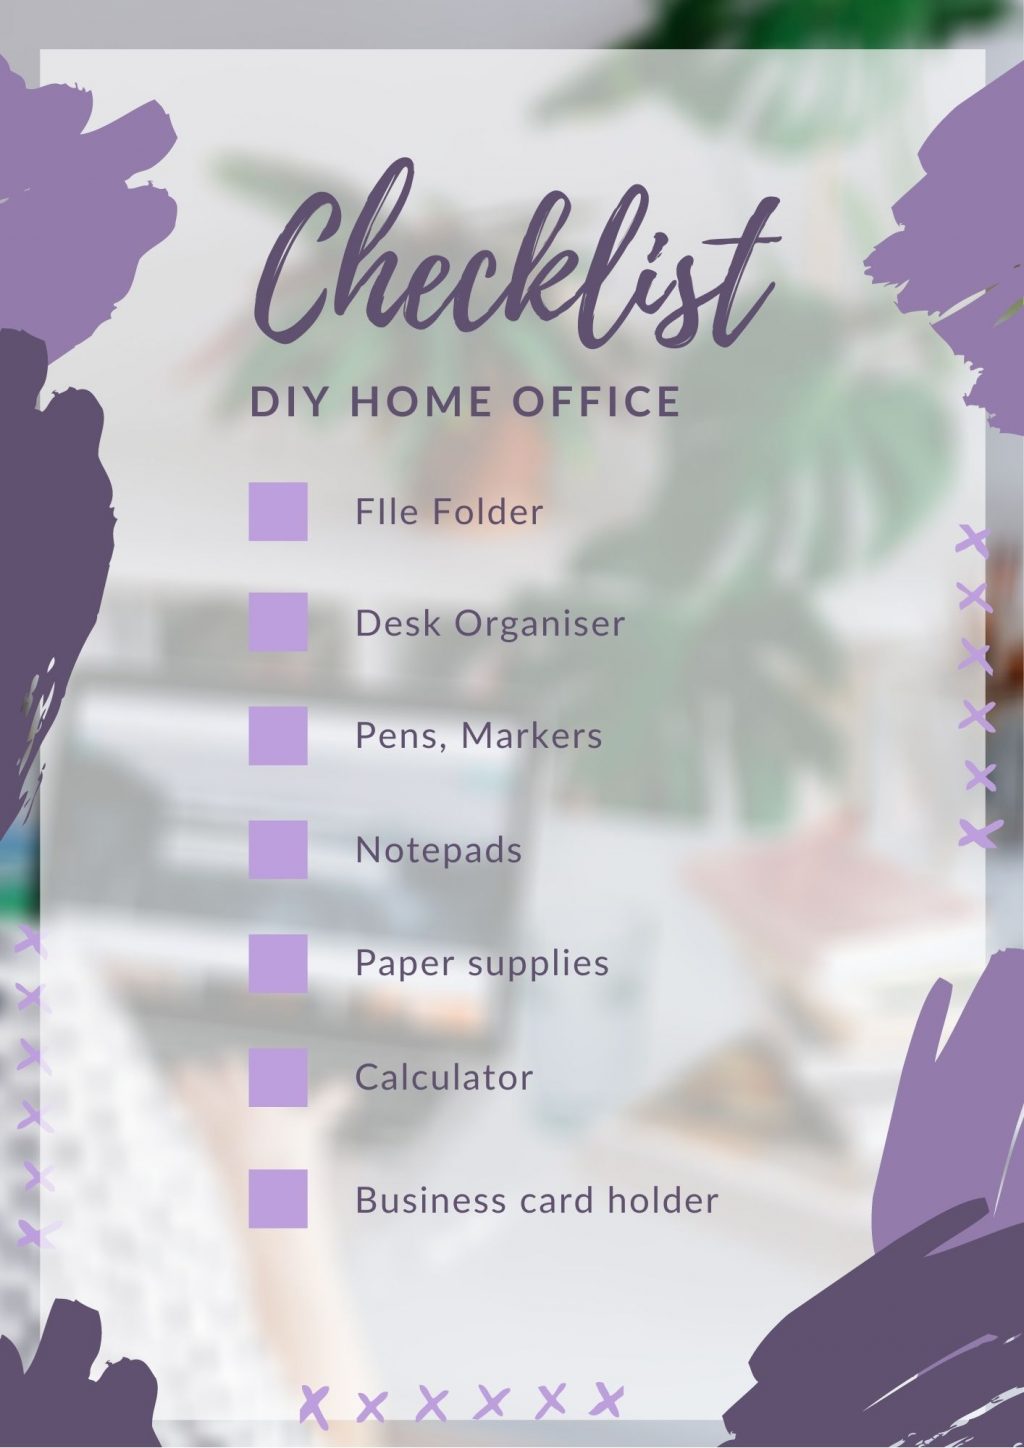 DIY home office check list